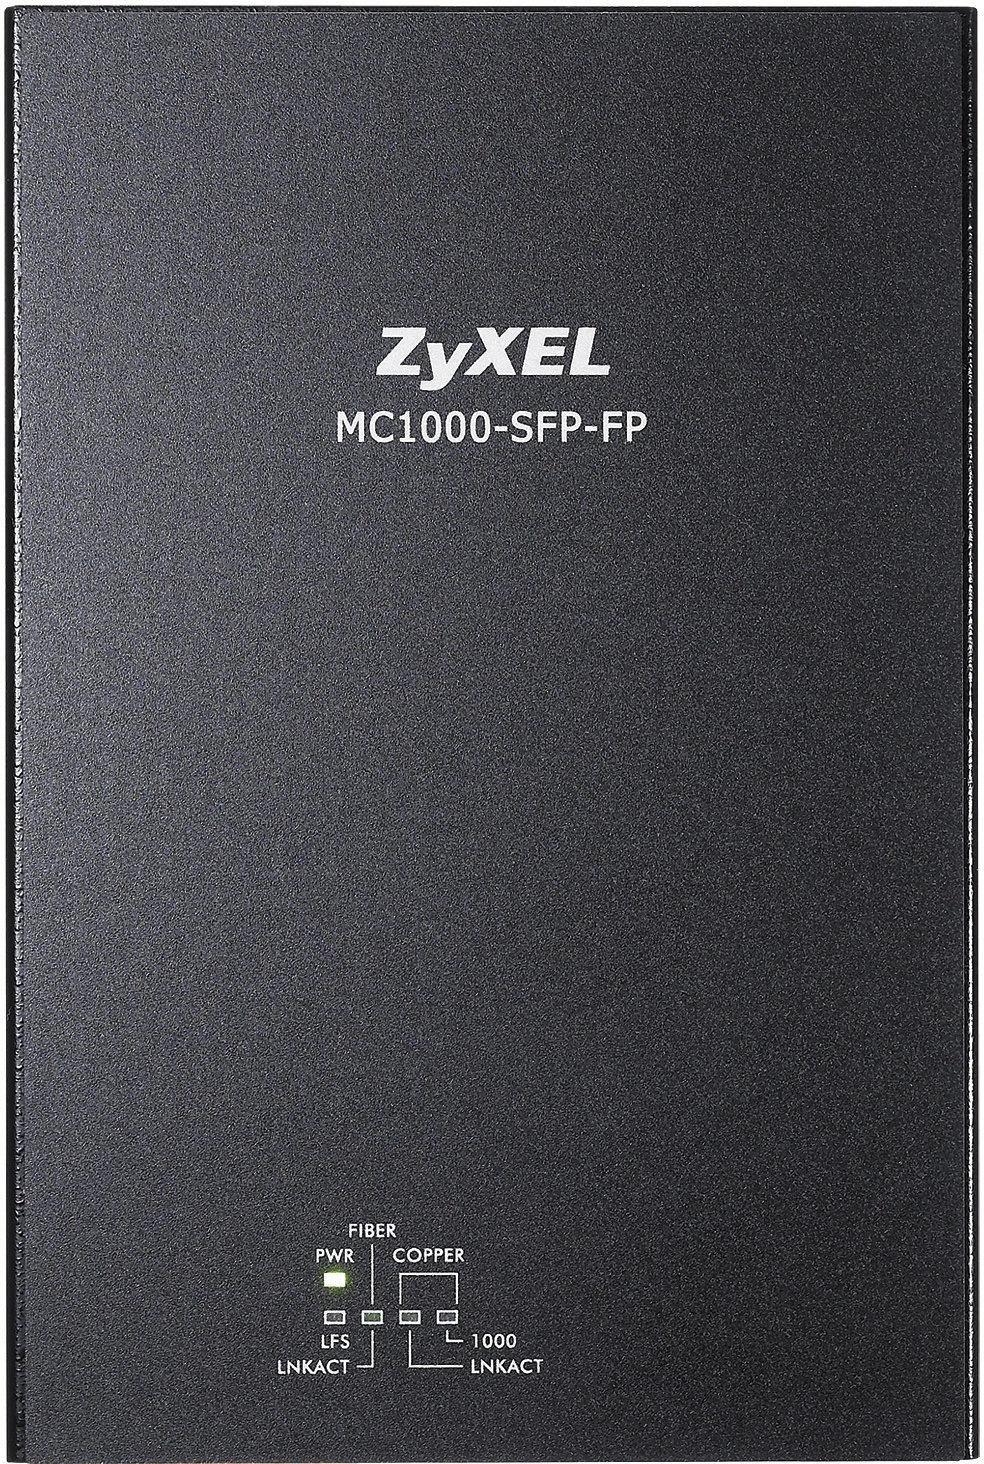 Zyxel MC1000-SFP-FP